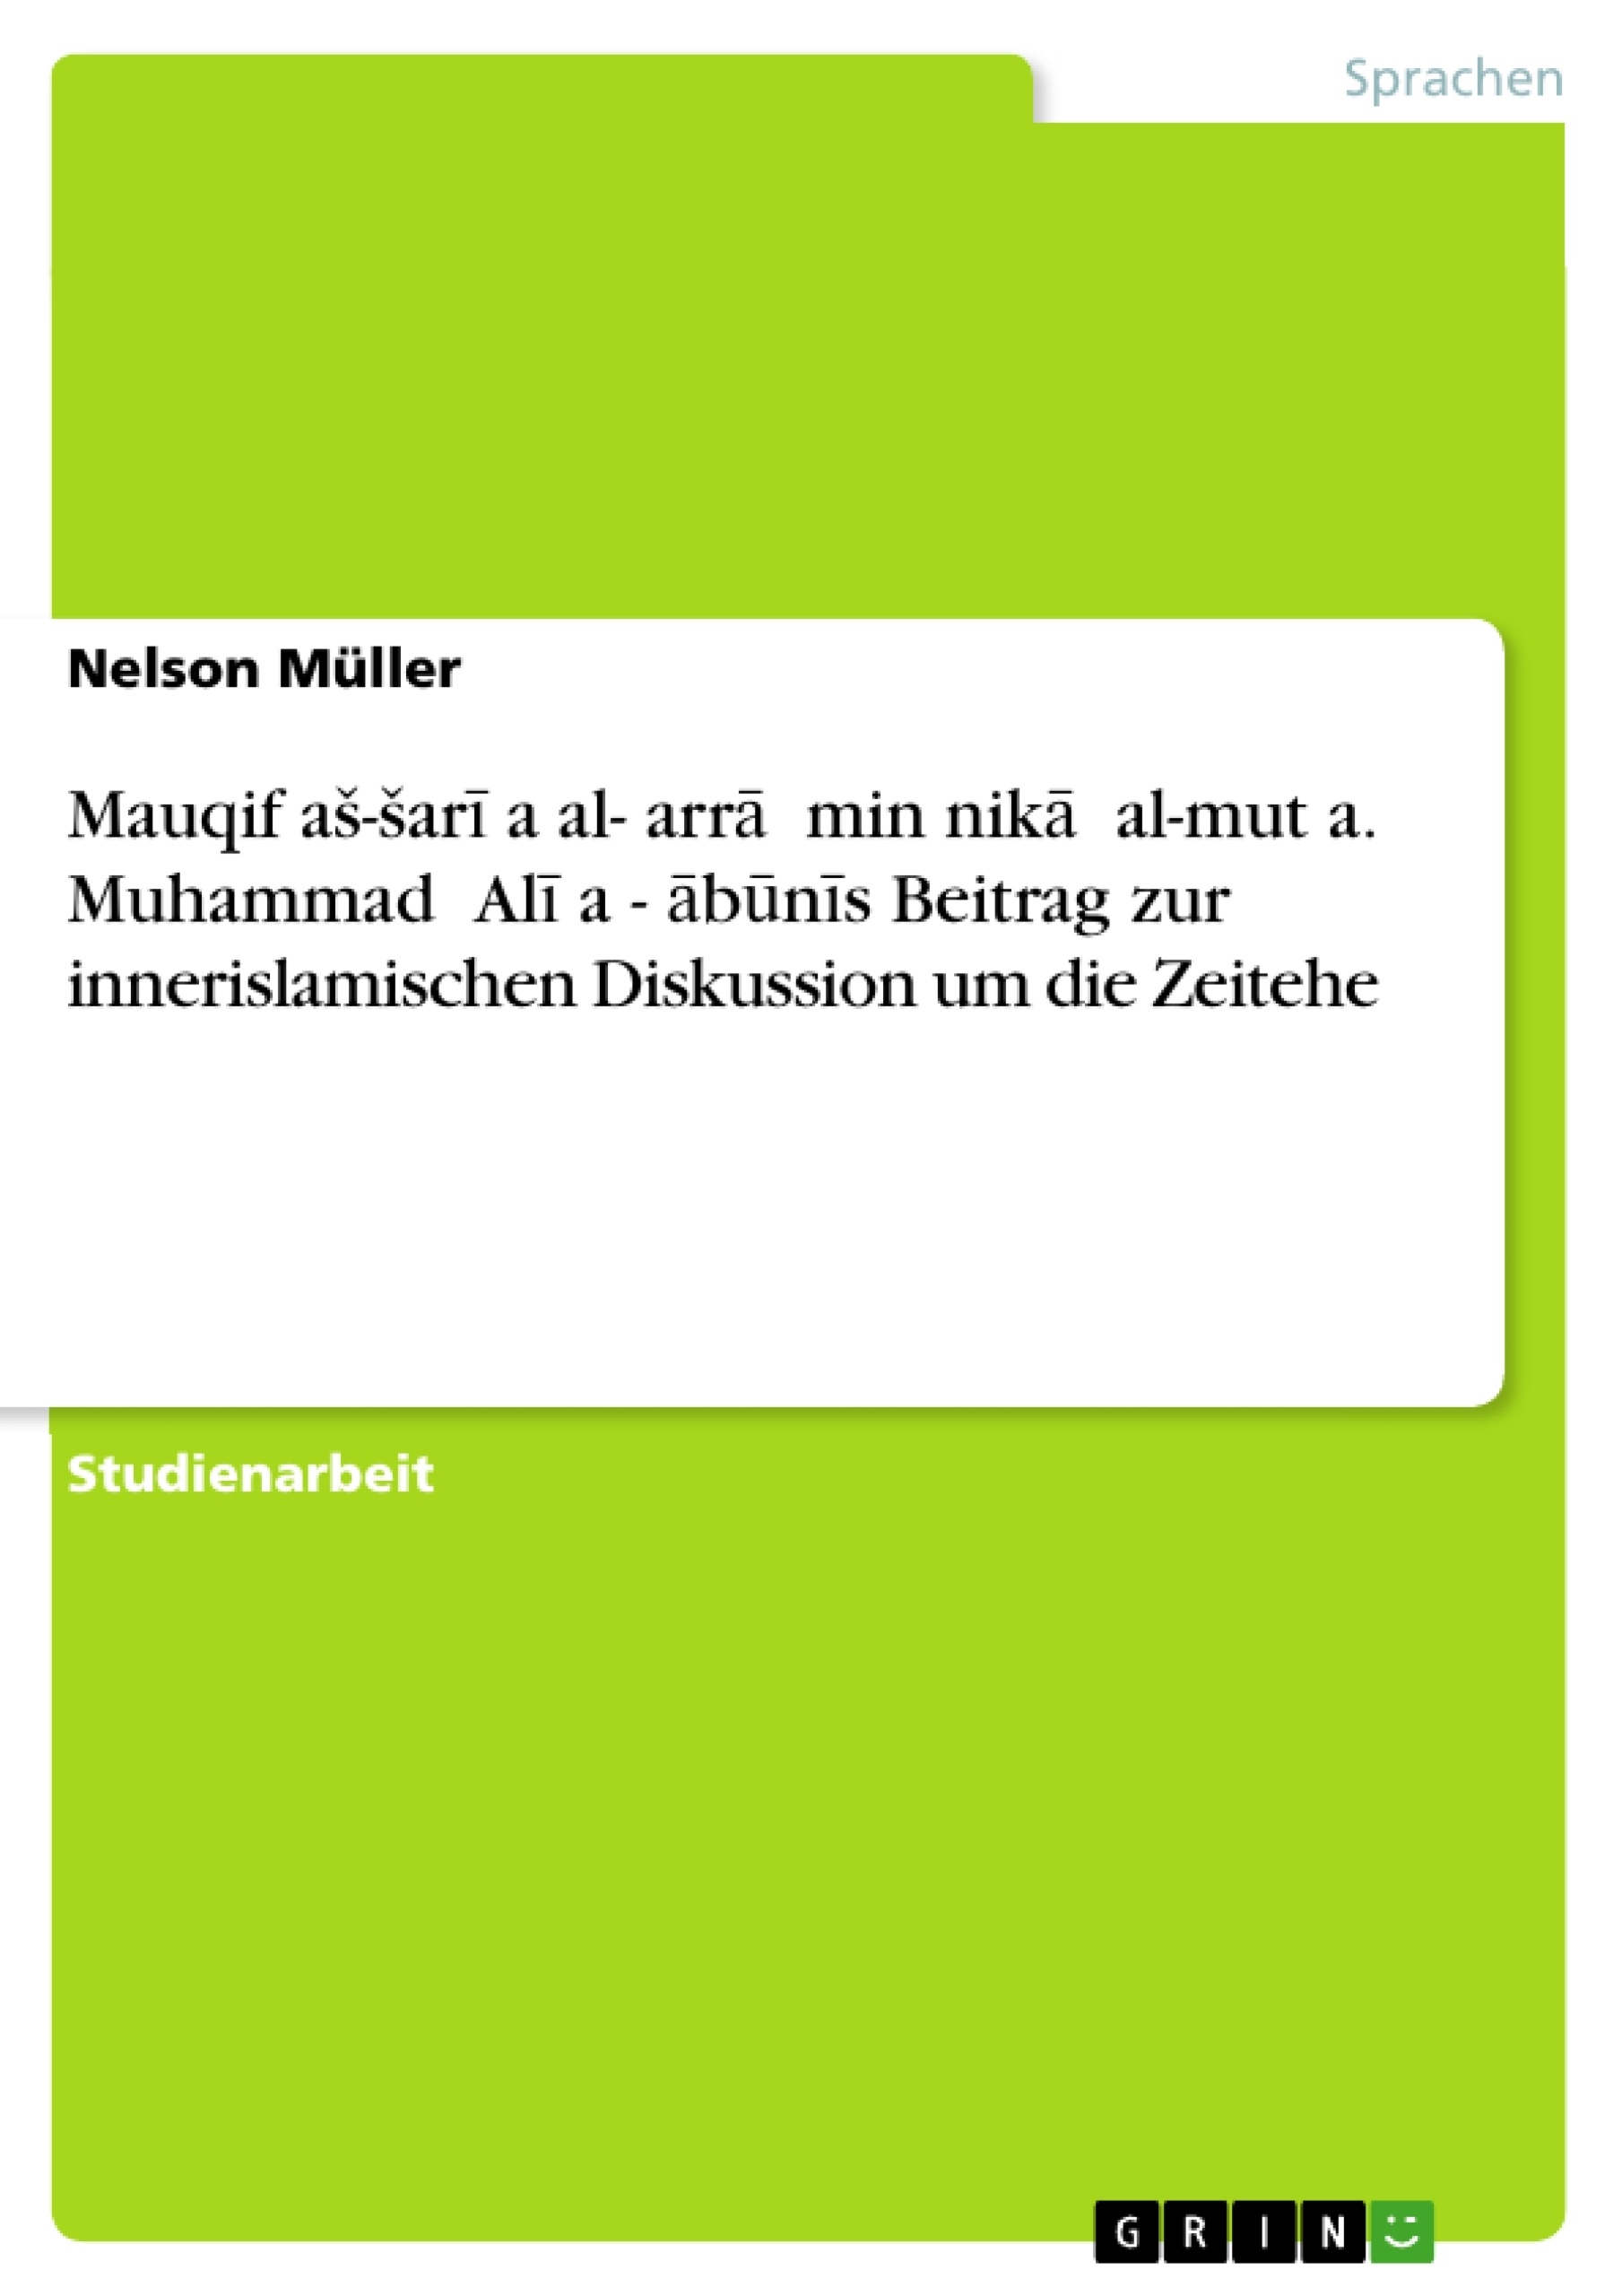 Titel: Mauqif aš-šarīʿa al-ġarrāʾ min nikāḥ al-mutʿa. Muhammad ʿAlī aṣ-Ṣābūnīs Beitrag zur innerislamischen Diskussion um die Zeitehe